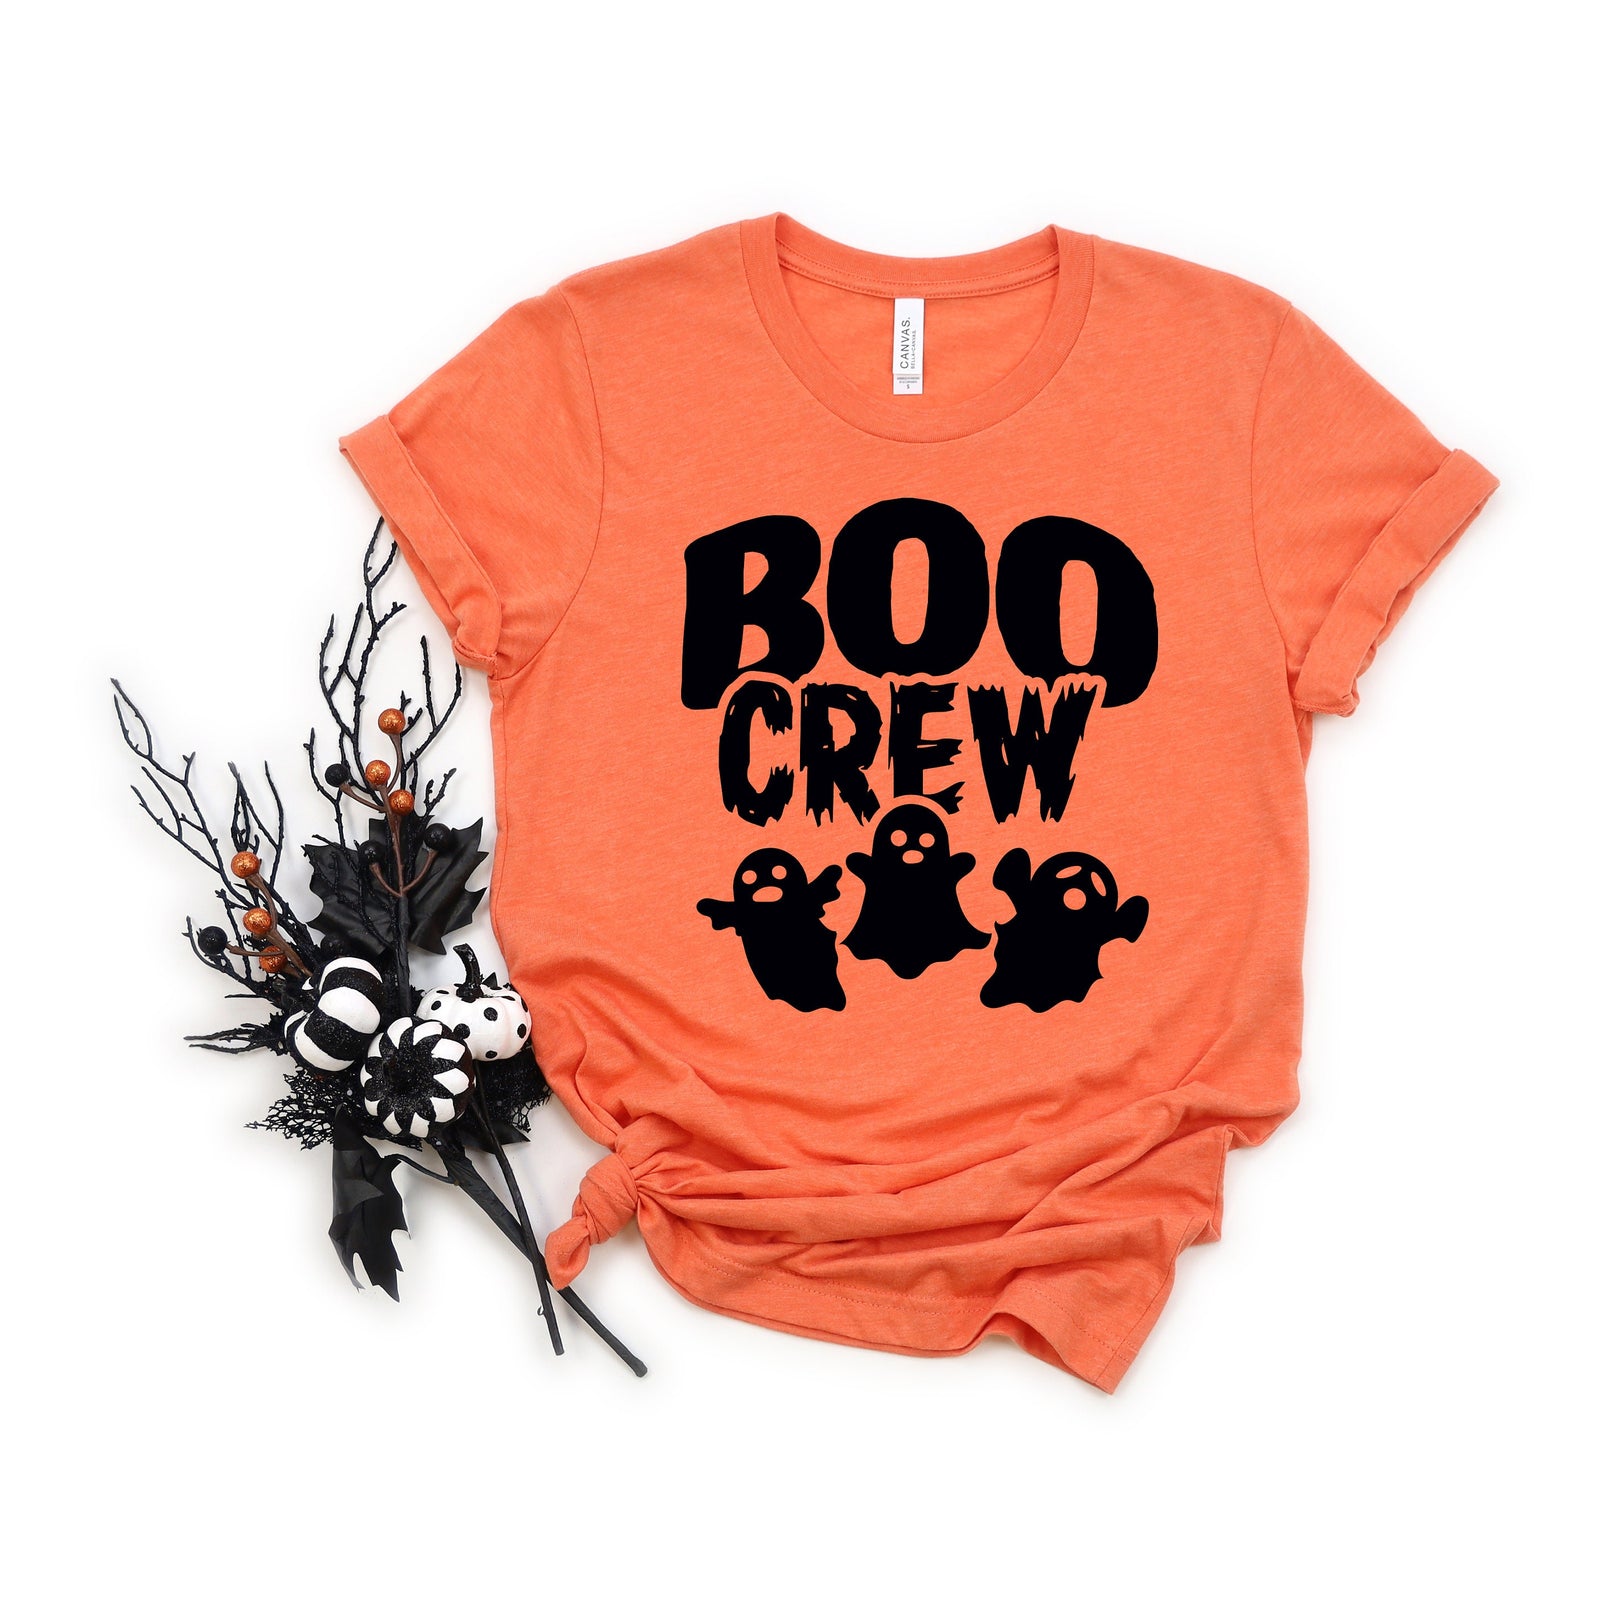 Boo Crew Adult T Shirt - Halloween - Office - School - Teacher - Grade Level - Fun Not So Scary Ghosts